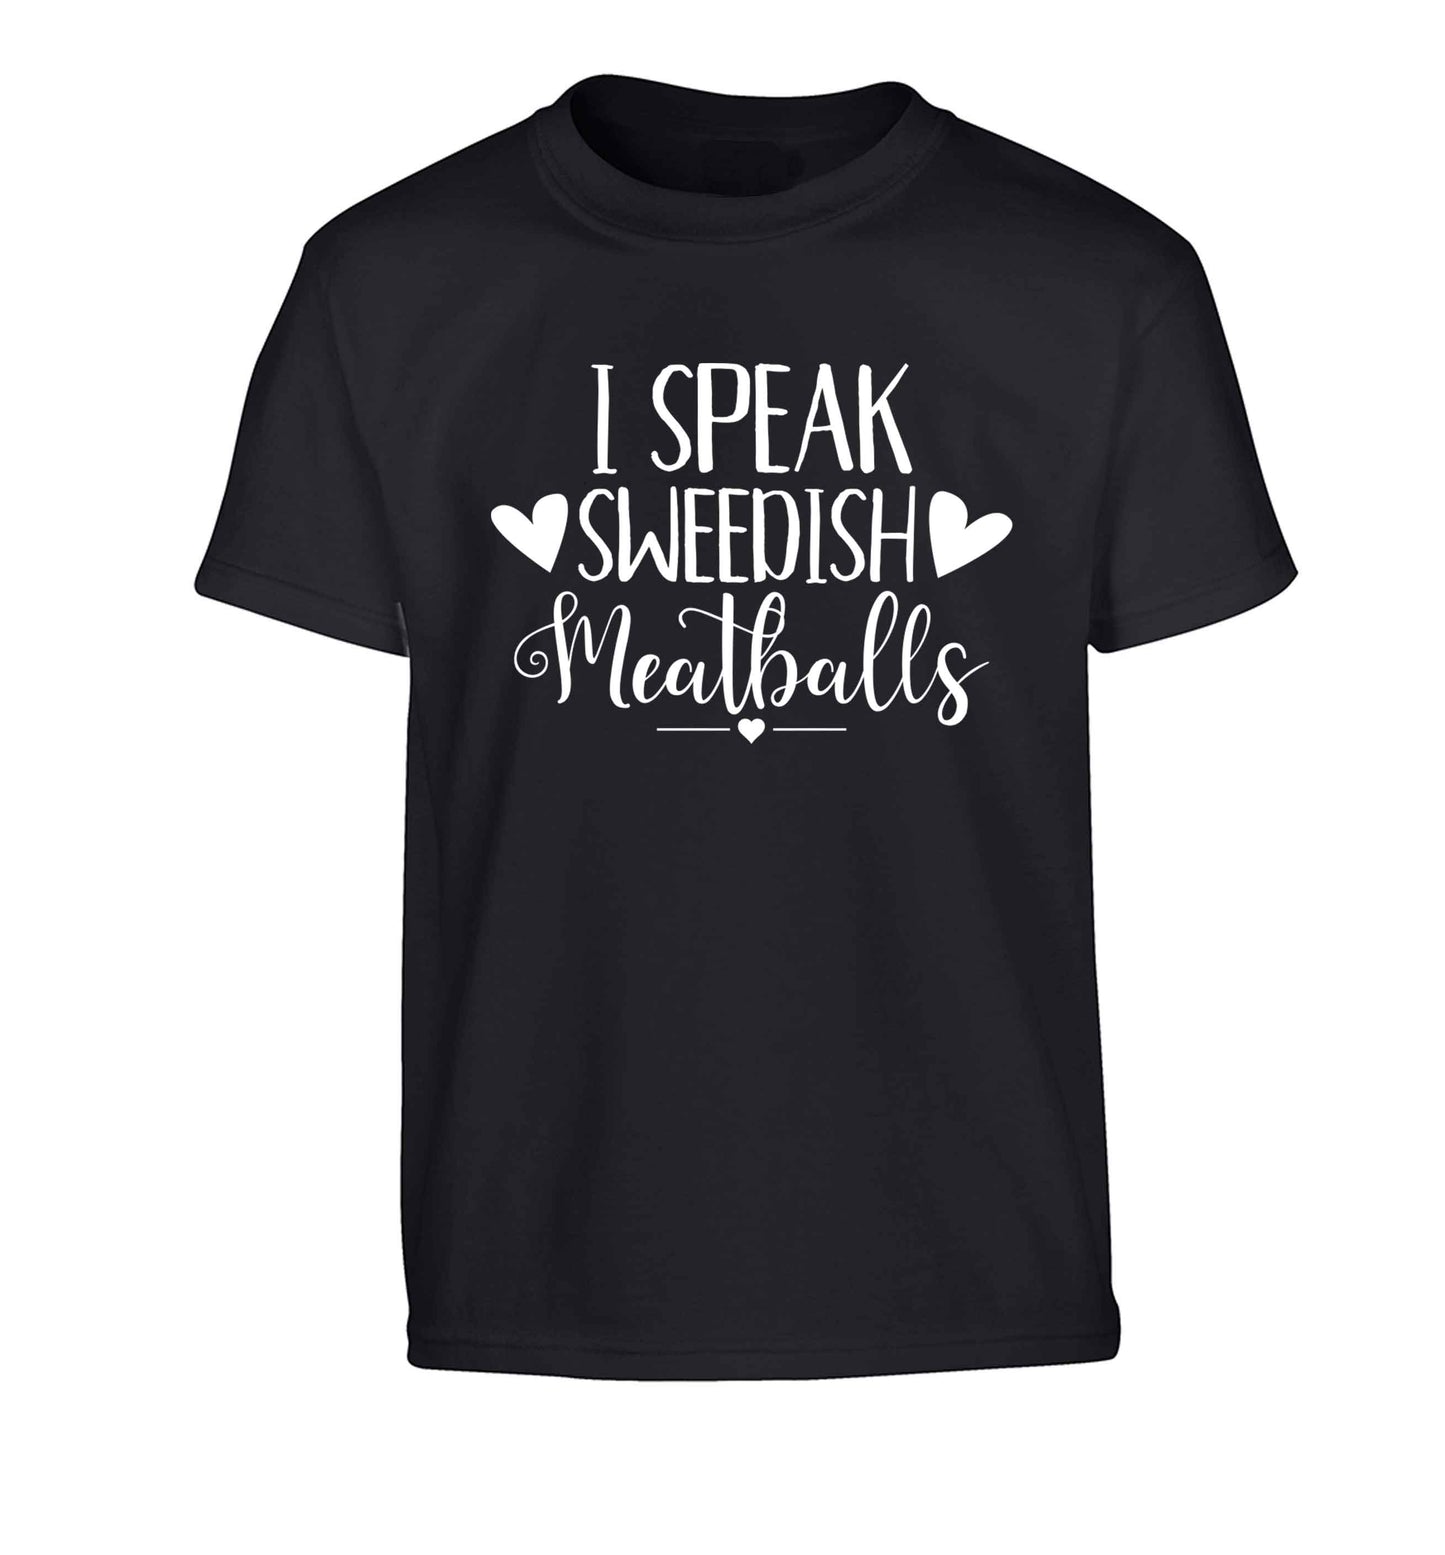 I speak sweedish...meatballs Children's black Tshirt 12-13 Years